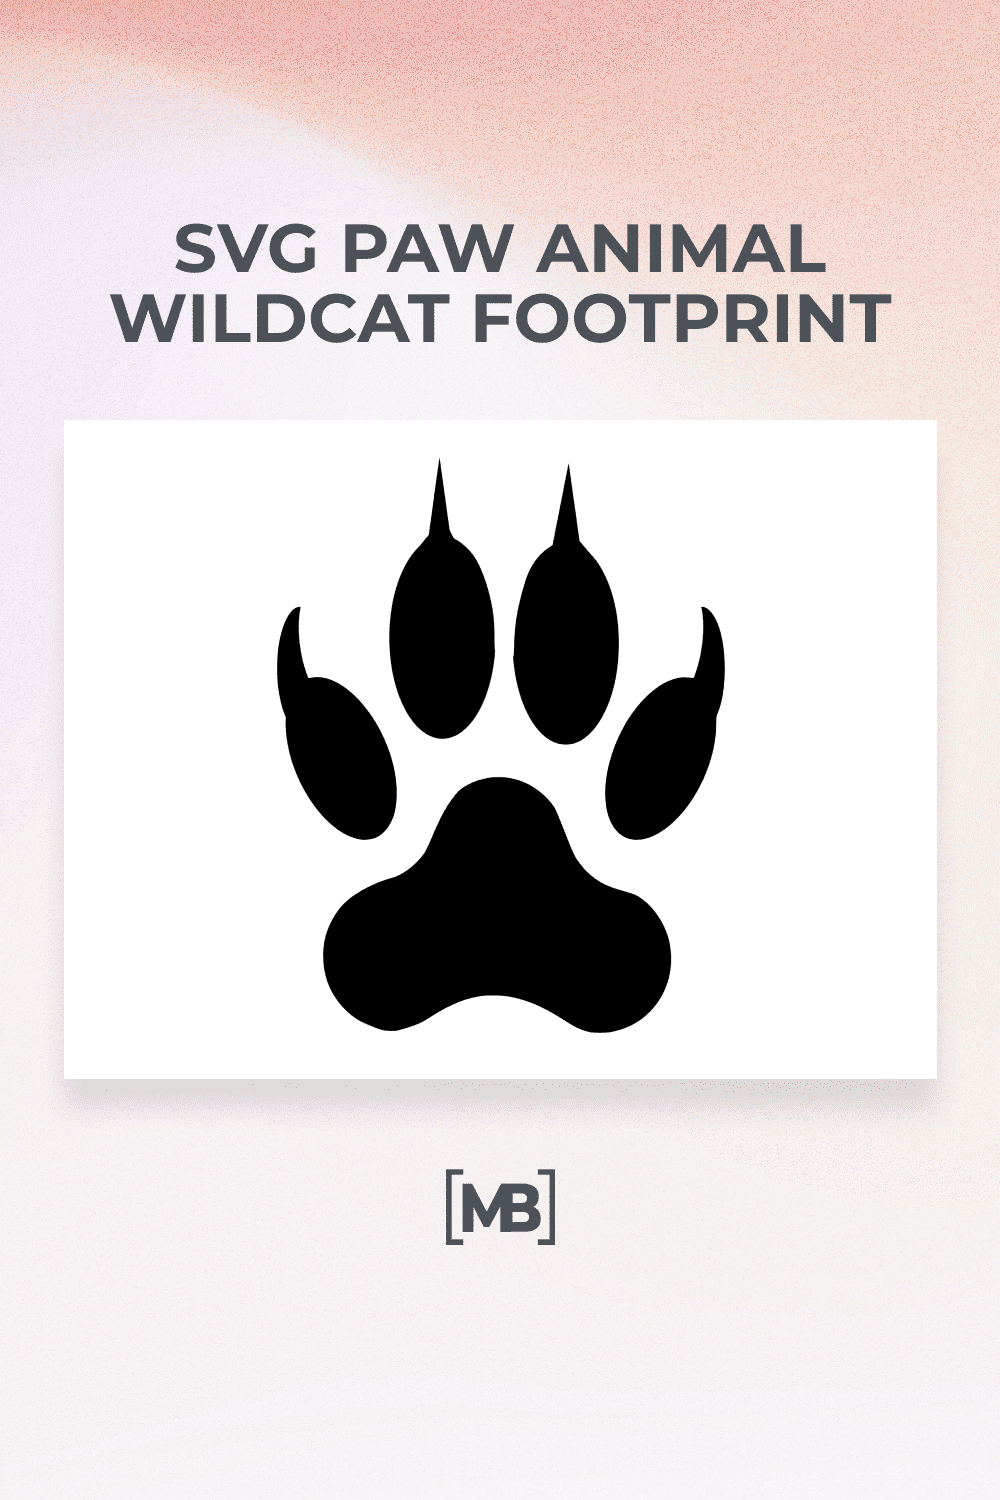 SVG paw animal wildcat footprint.